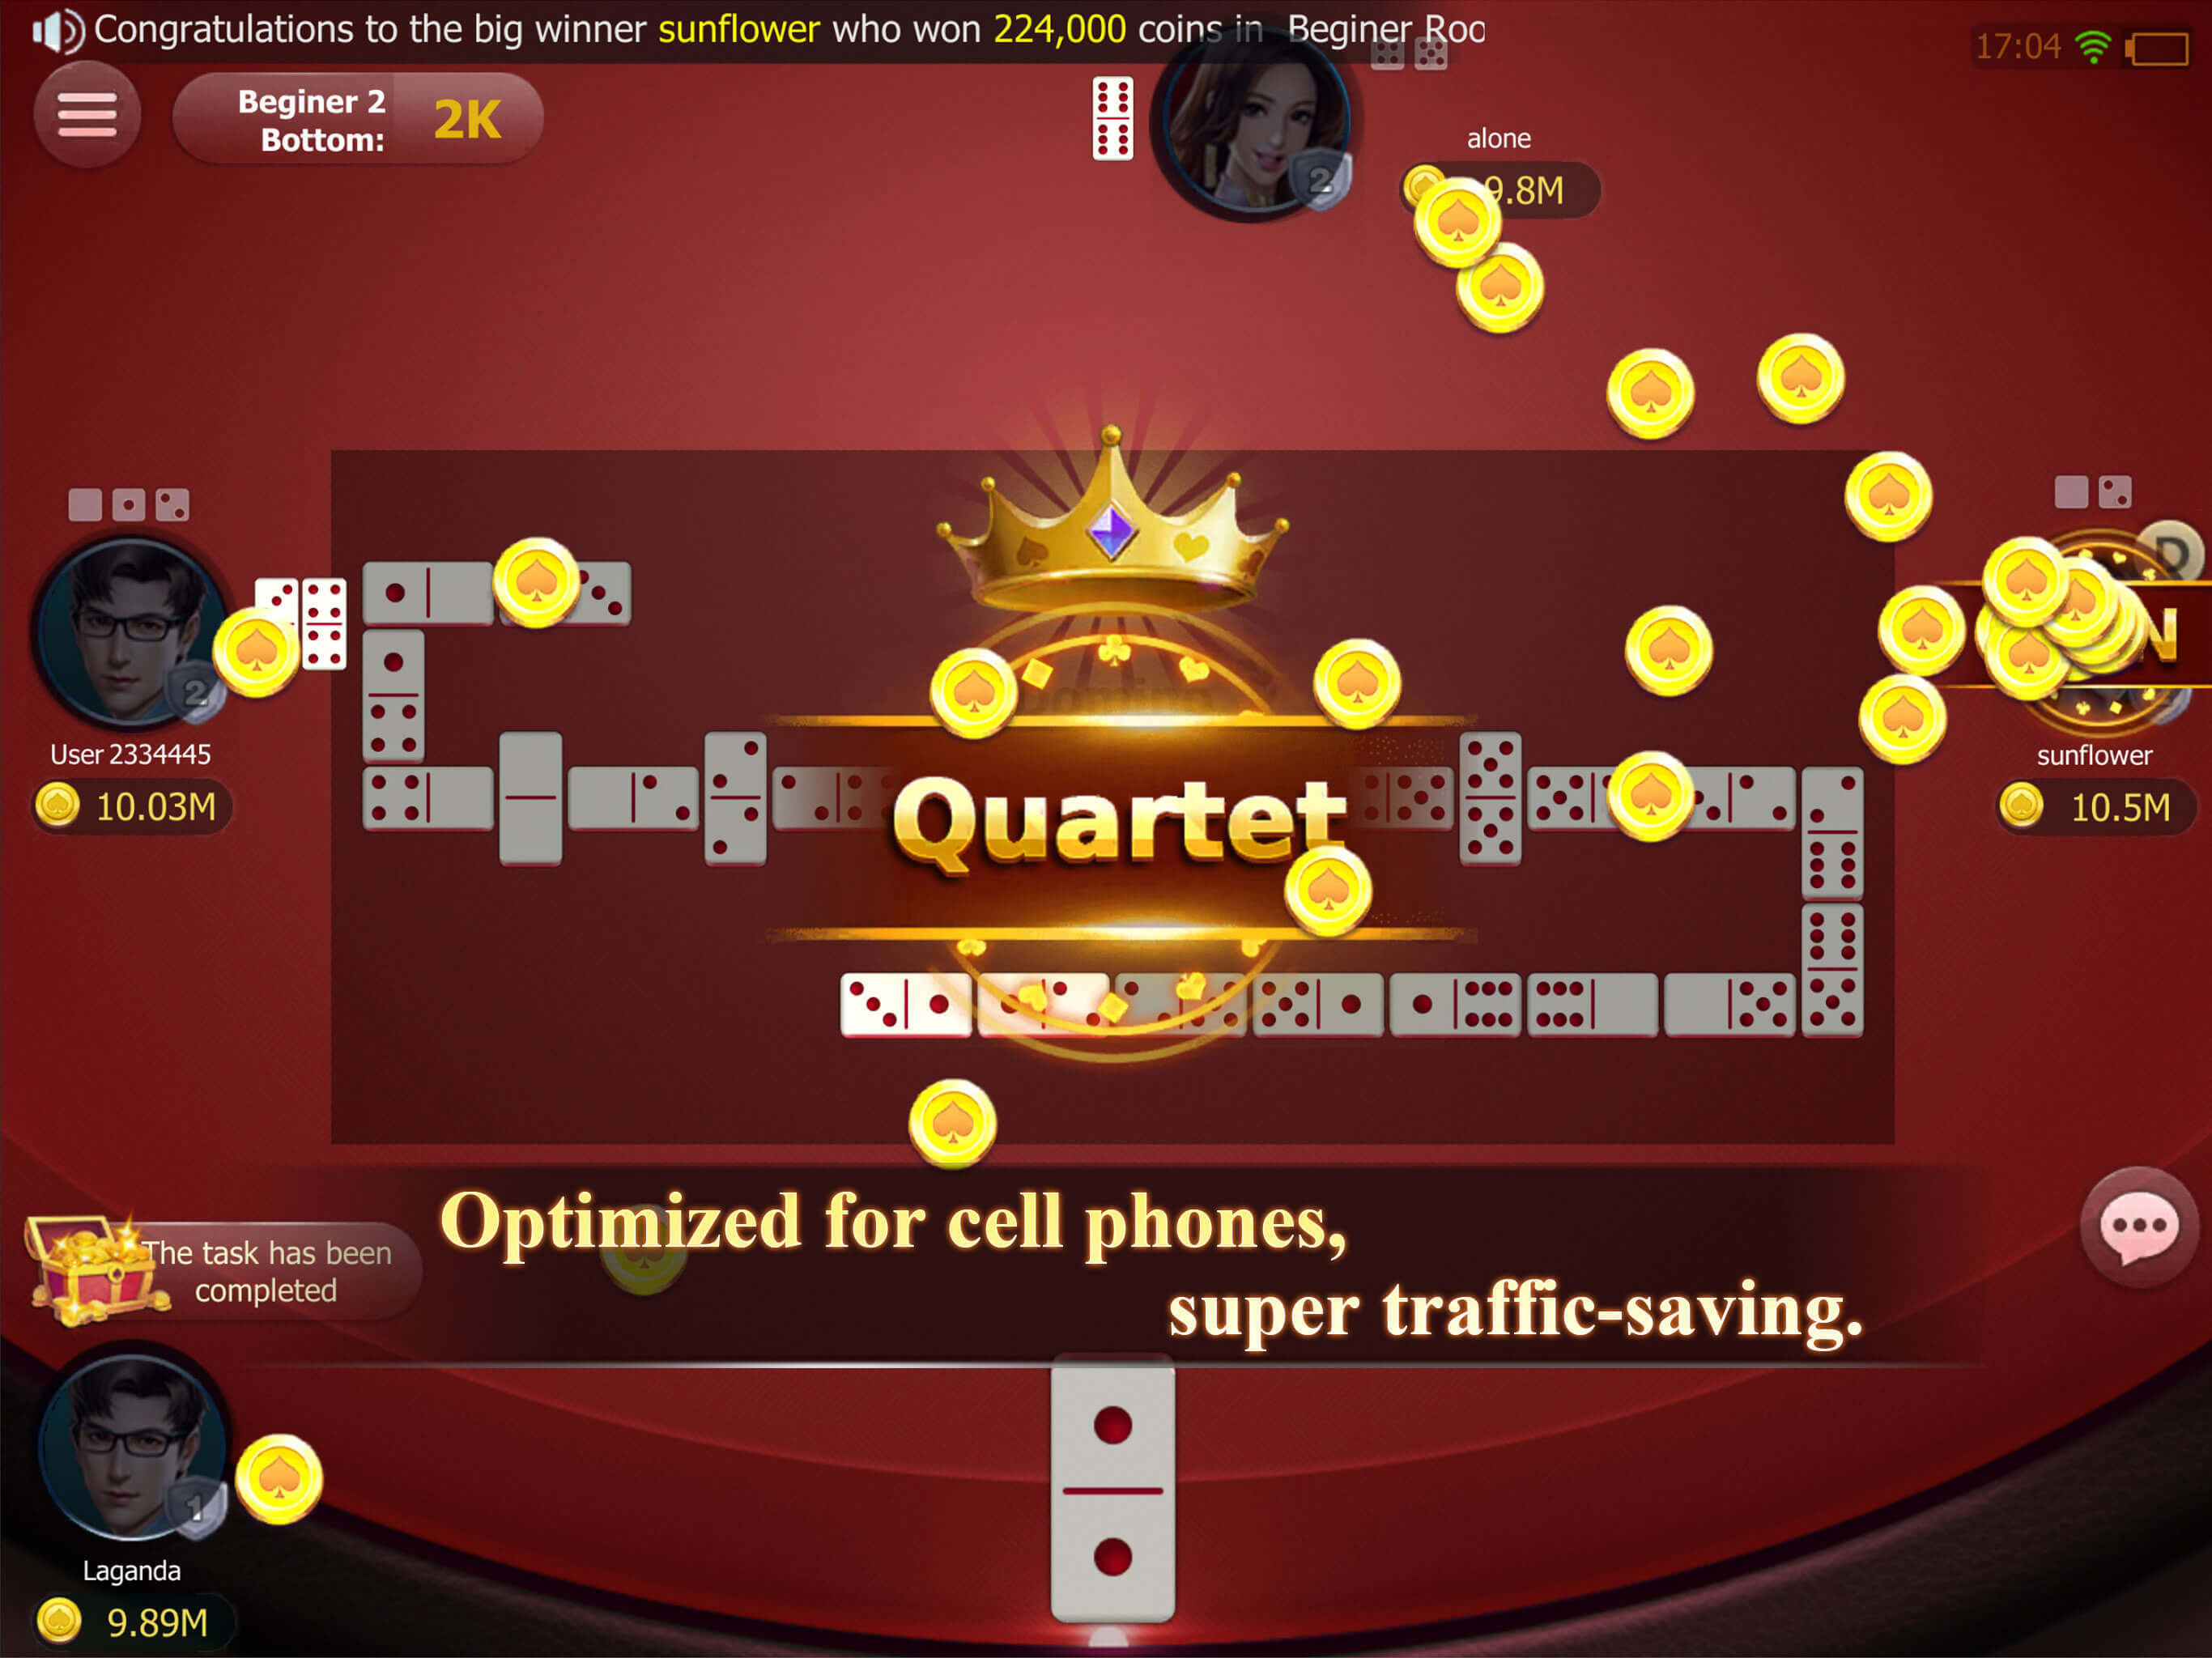 Screenshot of High Domino Online